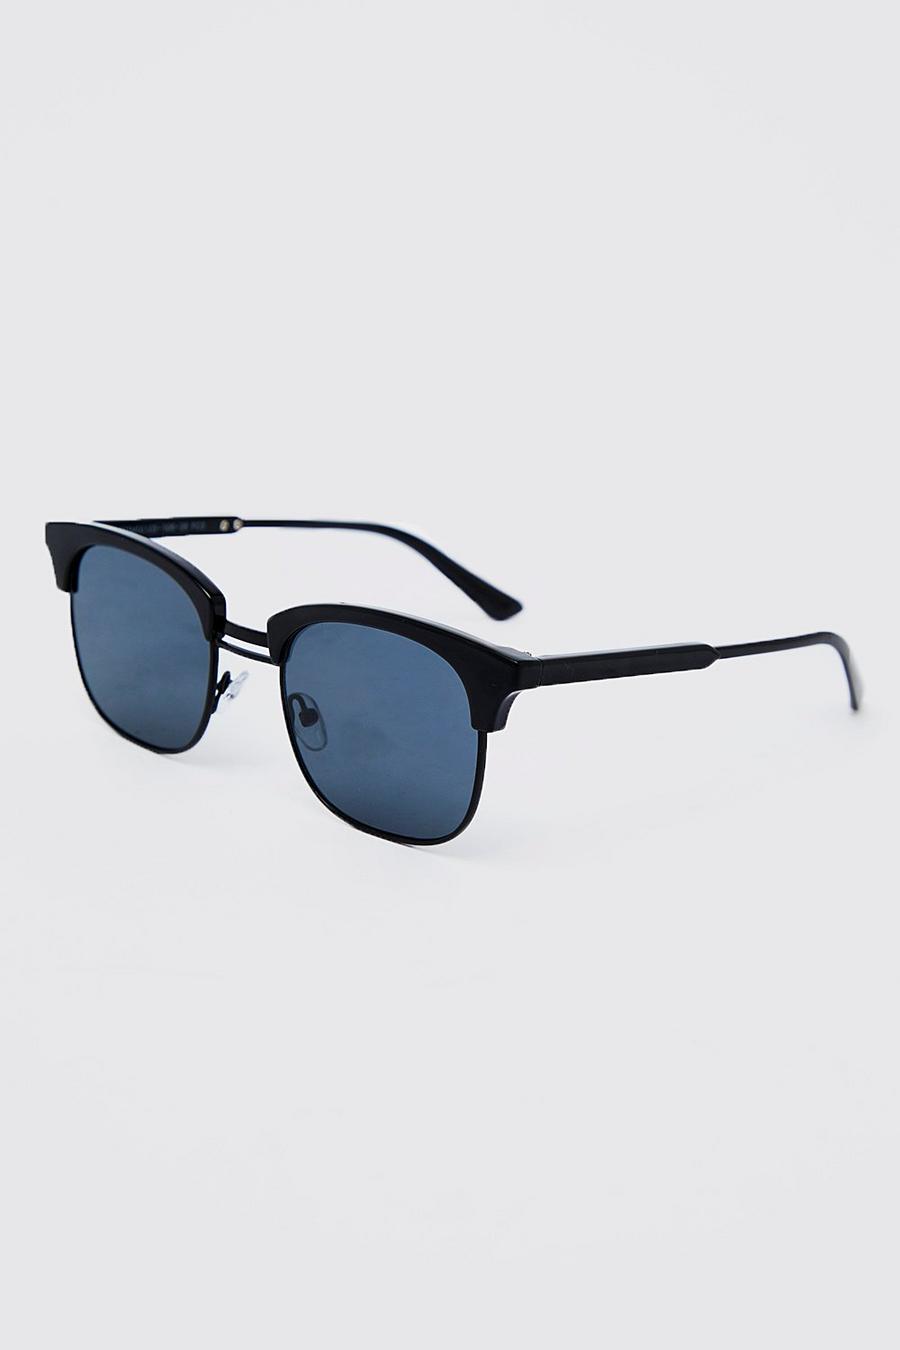 Black Recycled Half Frame Retro Sunglasses